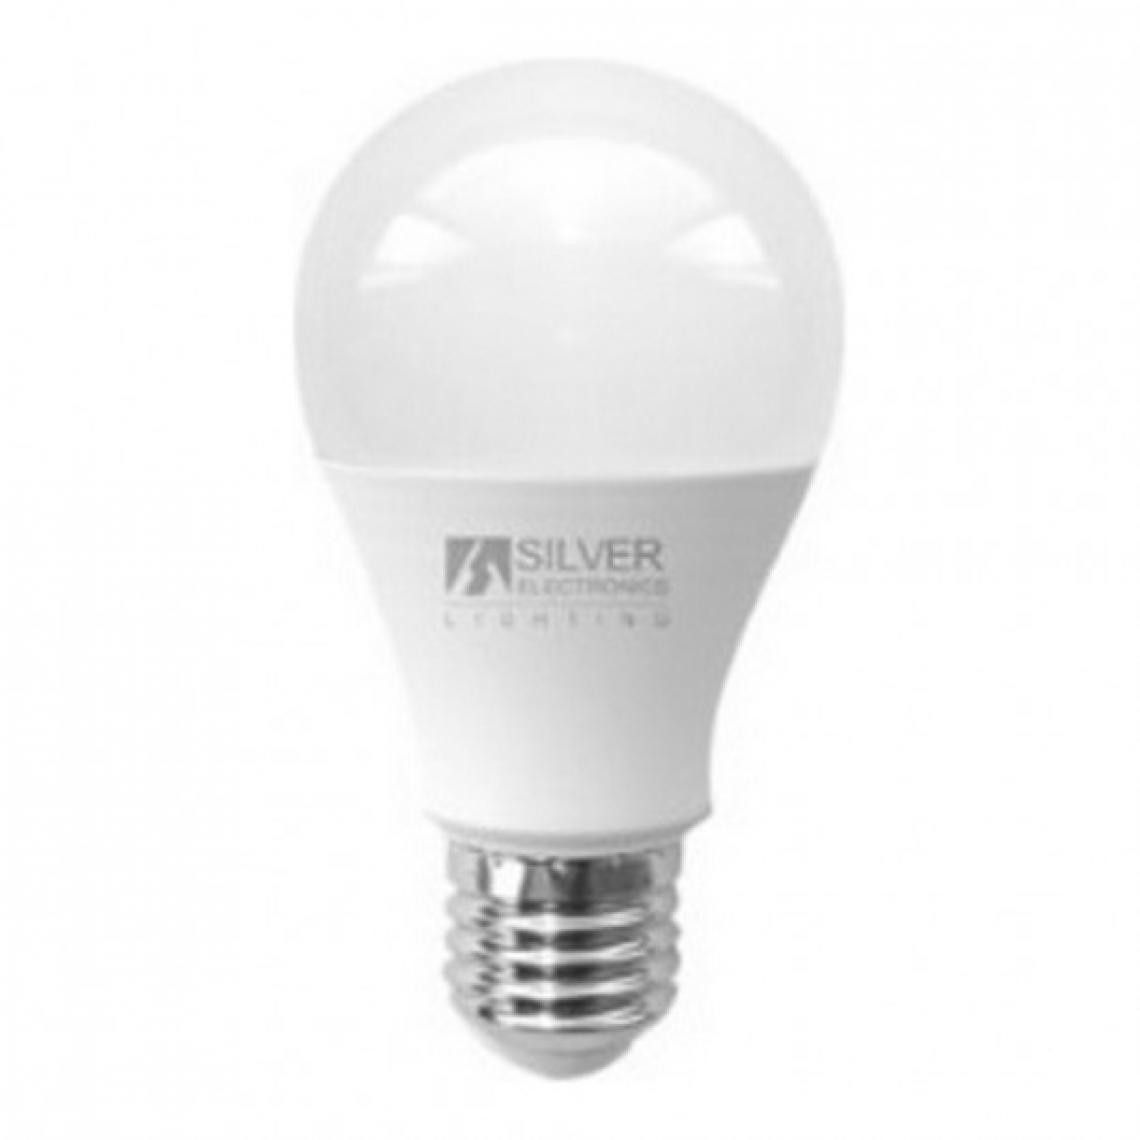 Unknown - Lampe LED Silver Electronics e27 20W 5000k - Lampe connectée